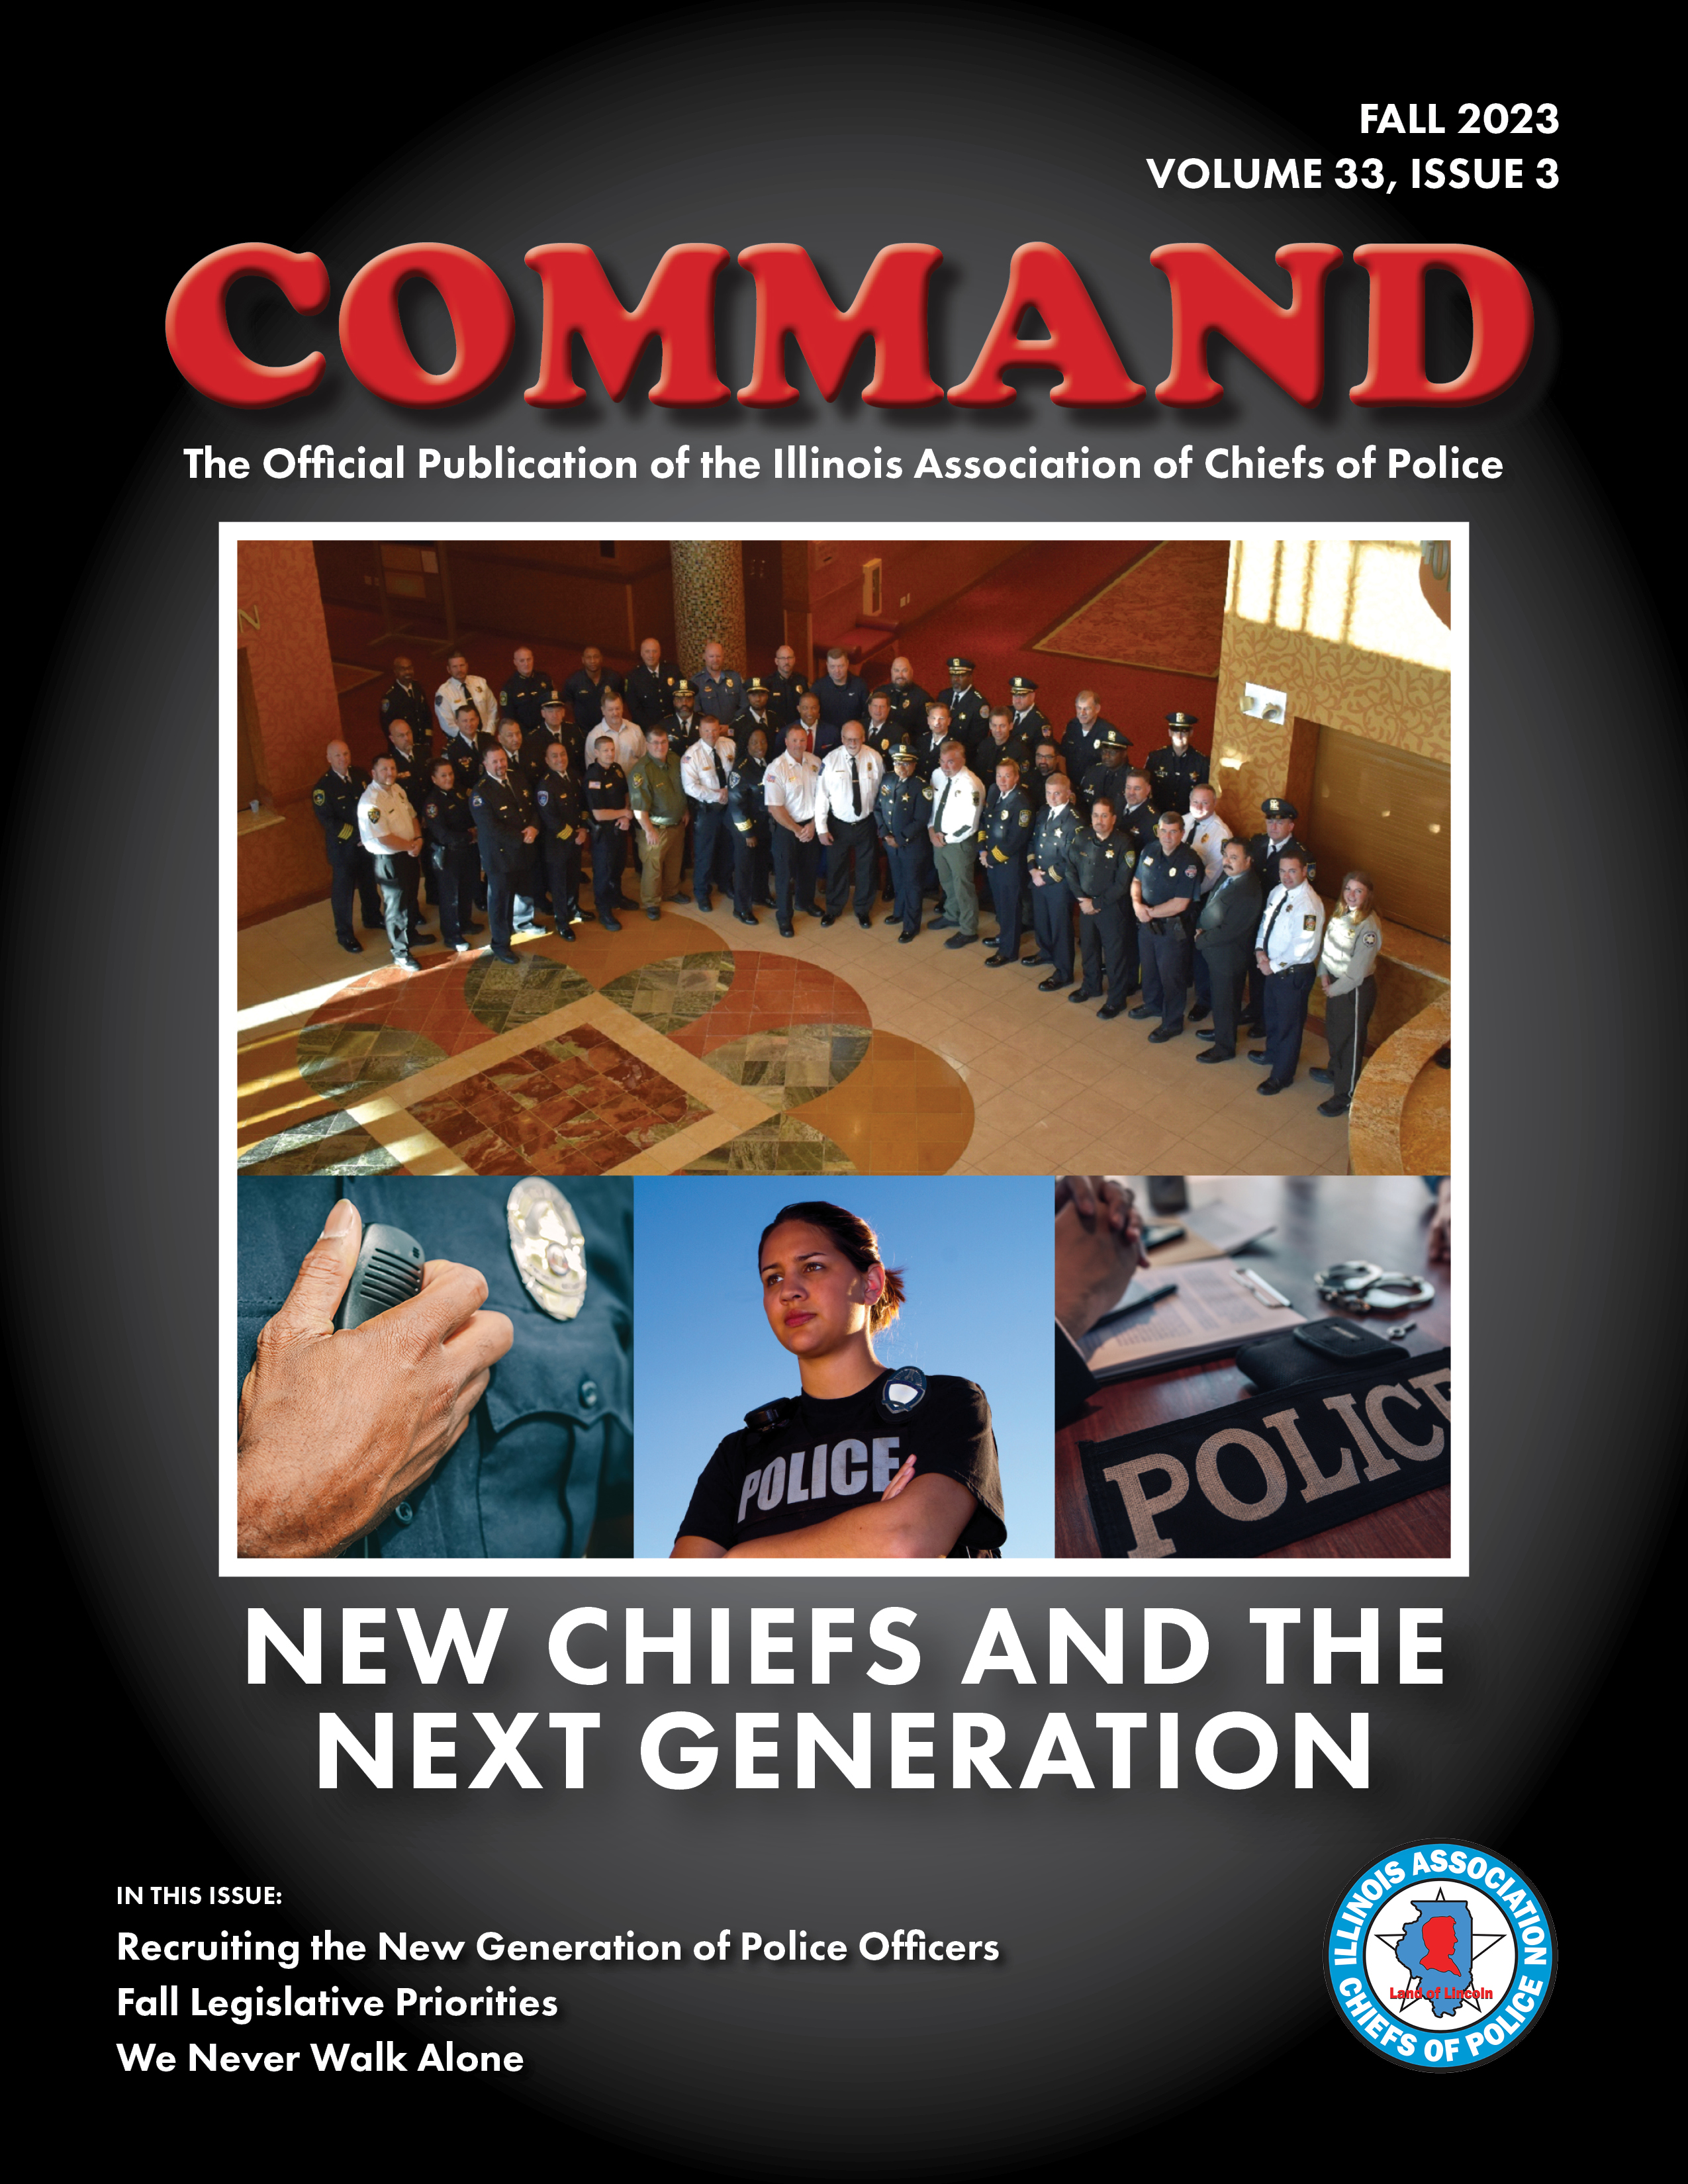 Fall 2023 Command Magazine Cover